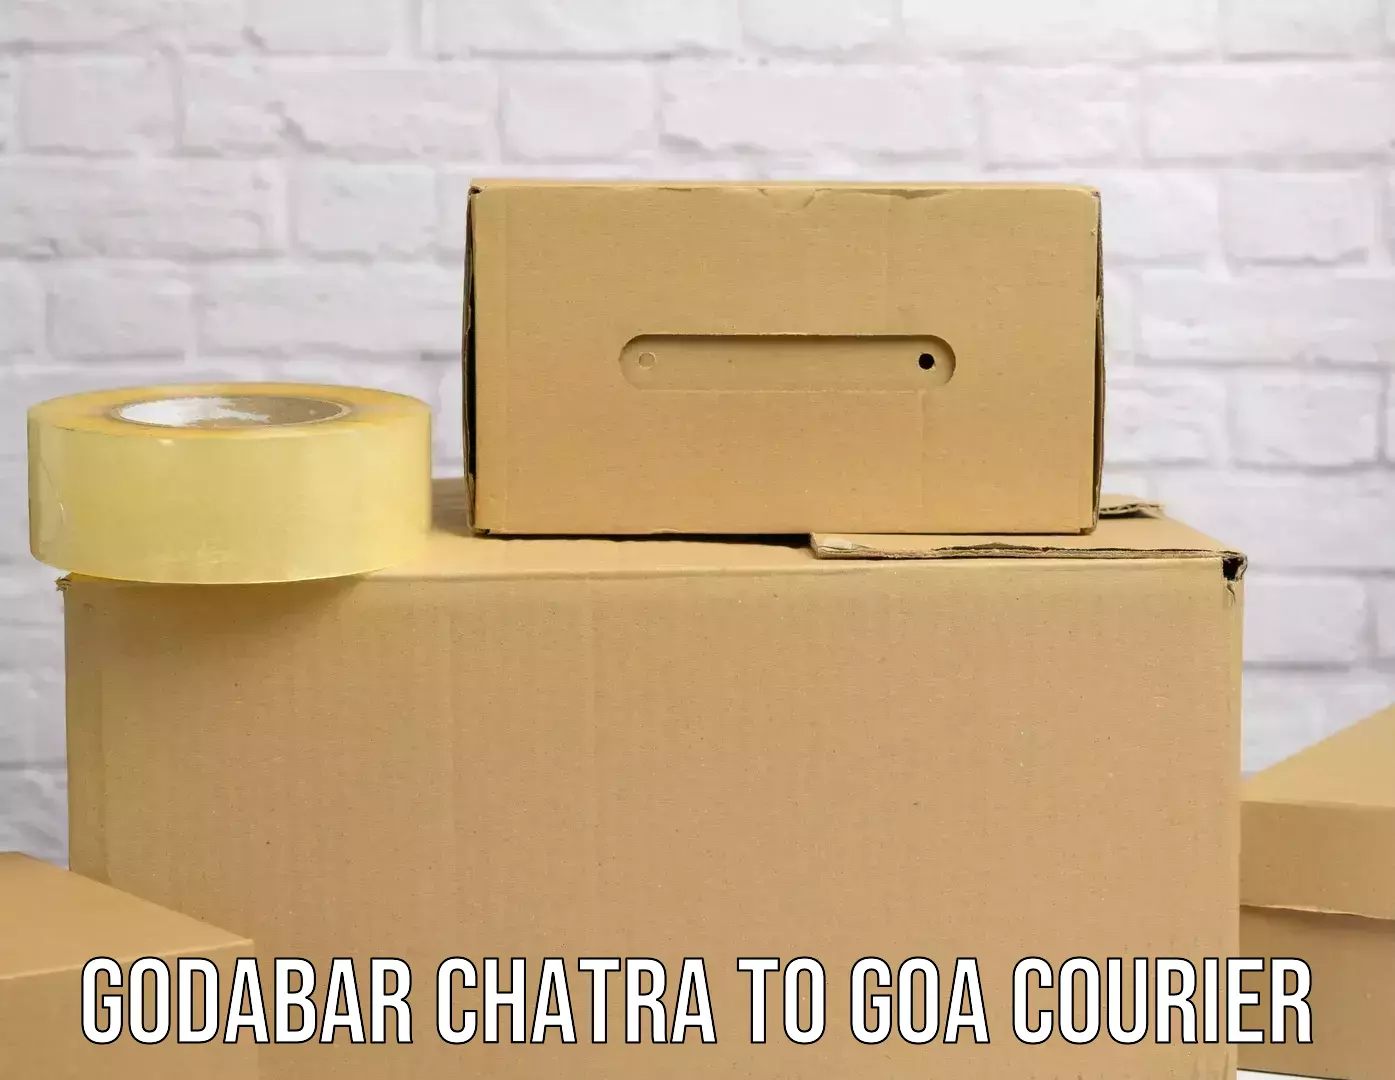 Express delivery network Godabar Chatra to Vasco da Gama